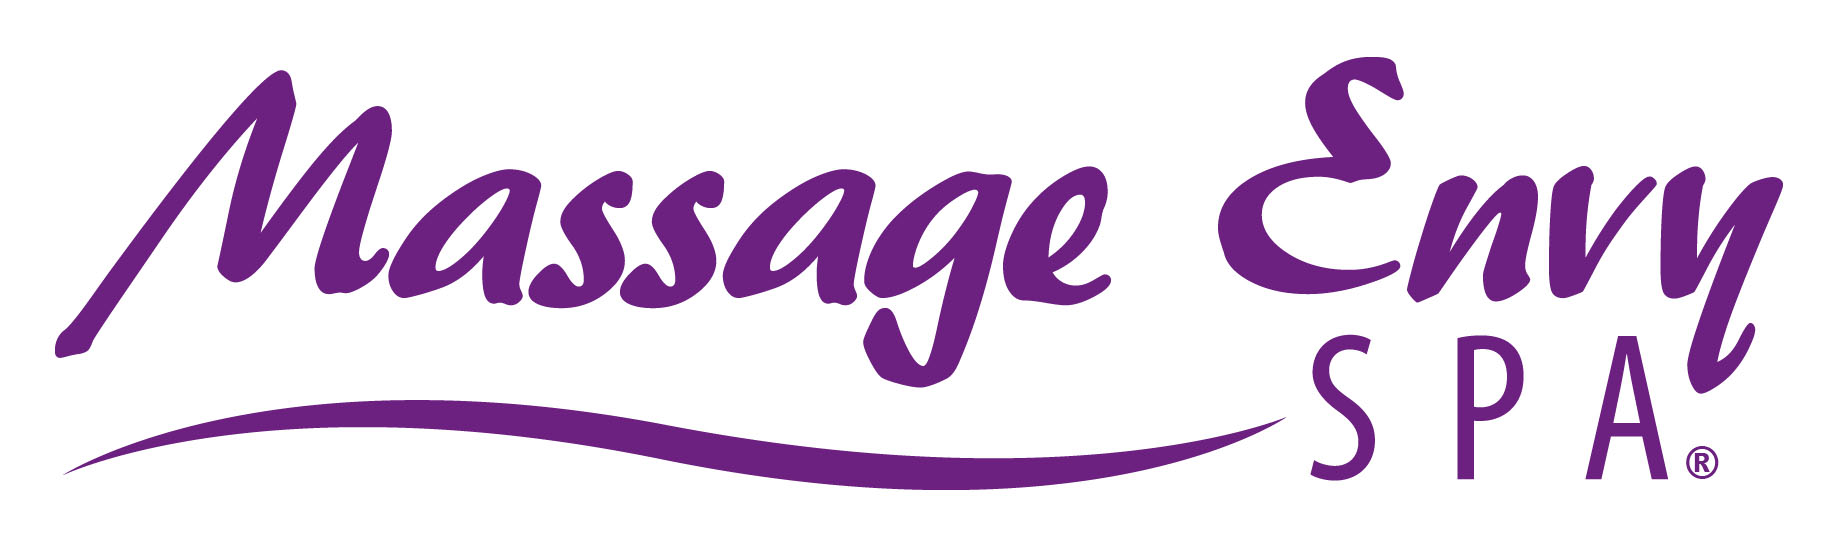 National Massage Franchise Partners with David's Bridal to Help Brides Relieve Wedding Stress, MASSAGE Magazine